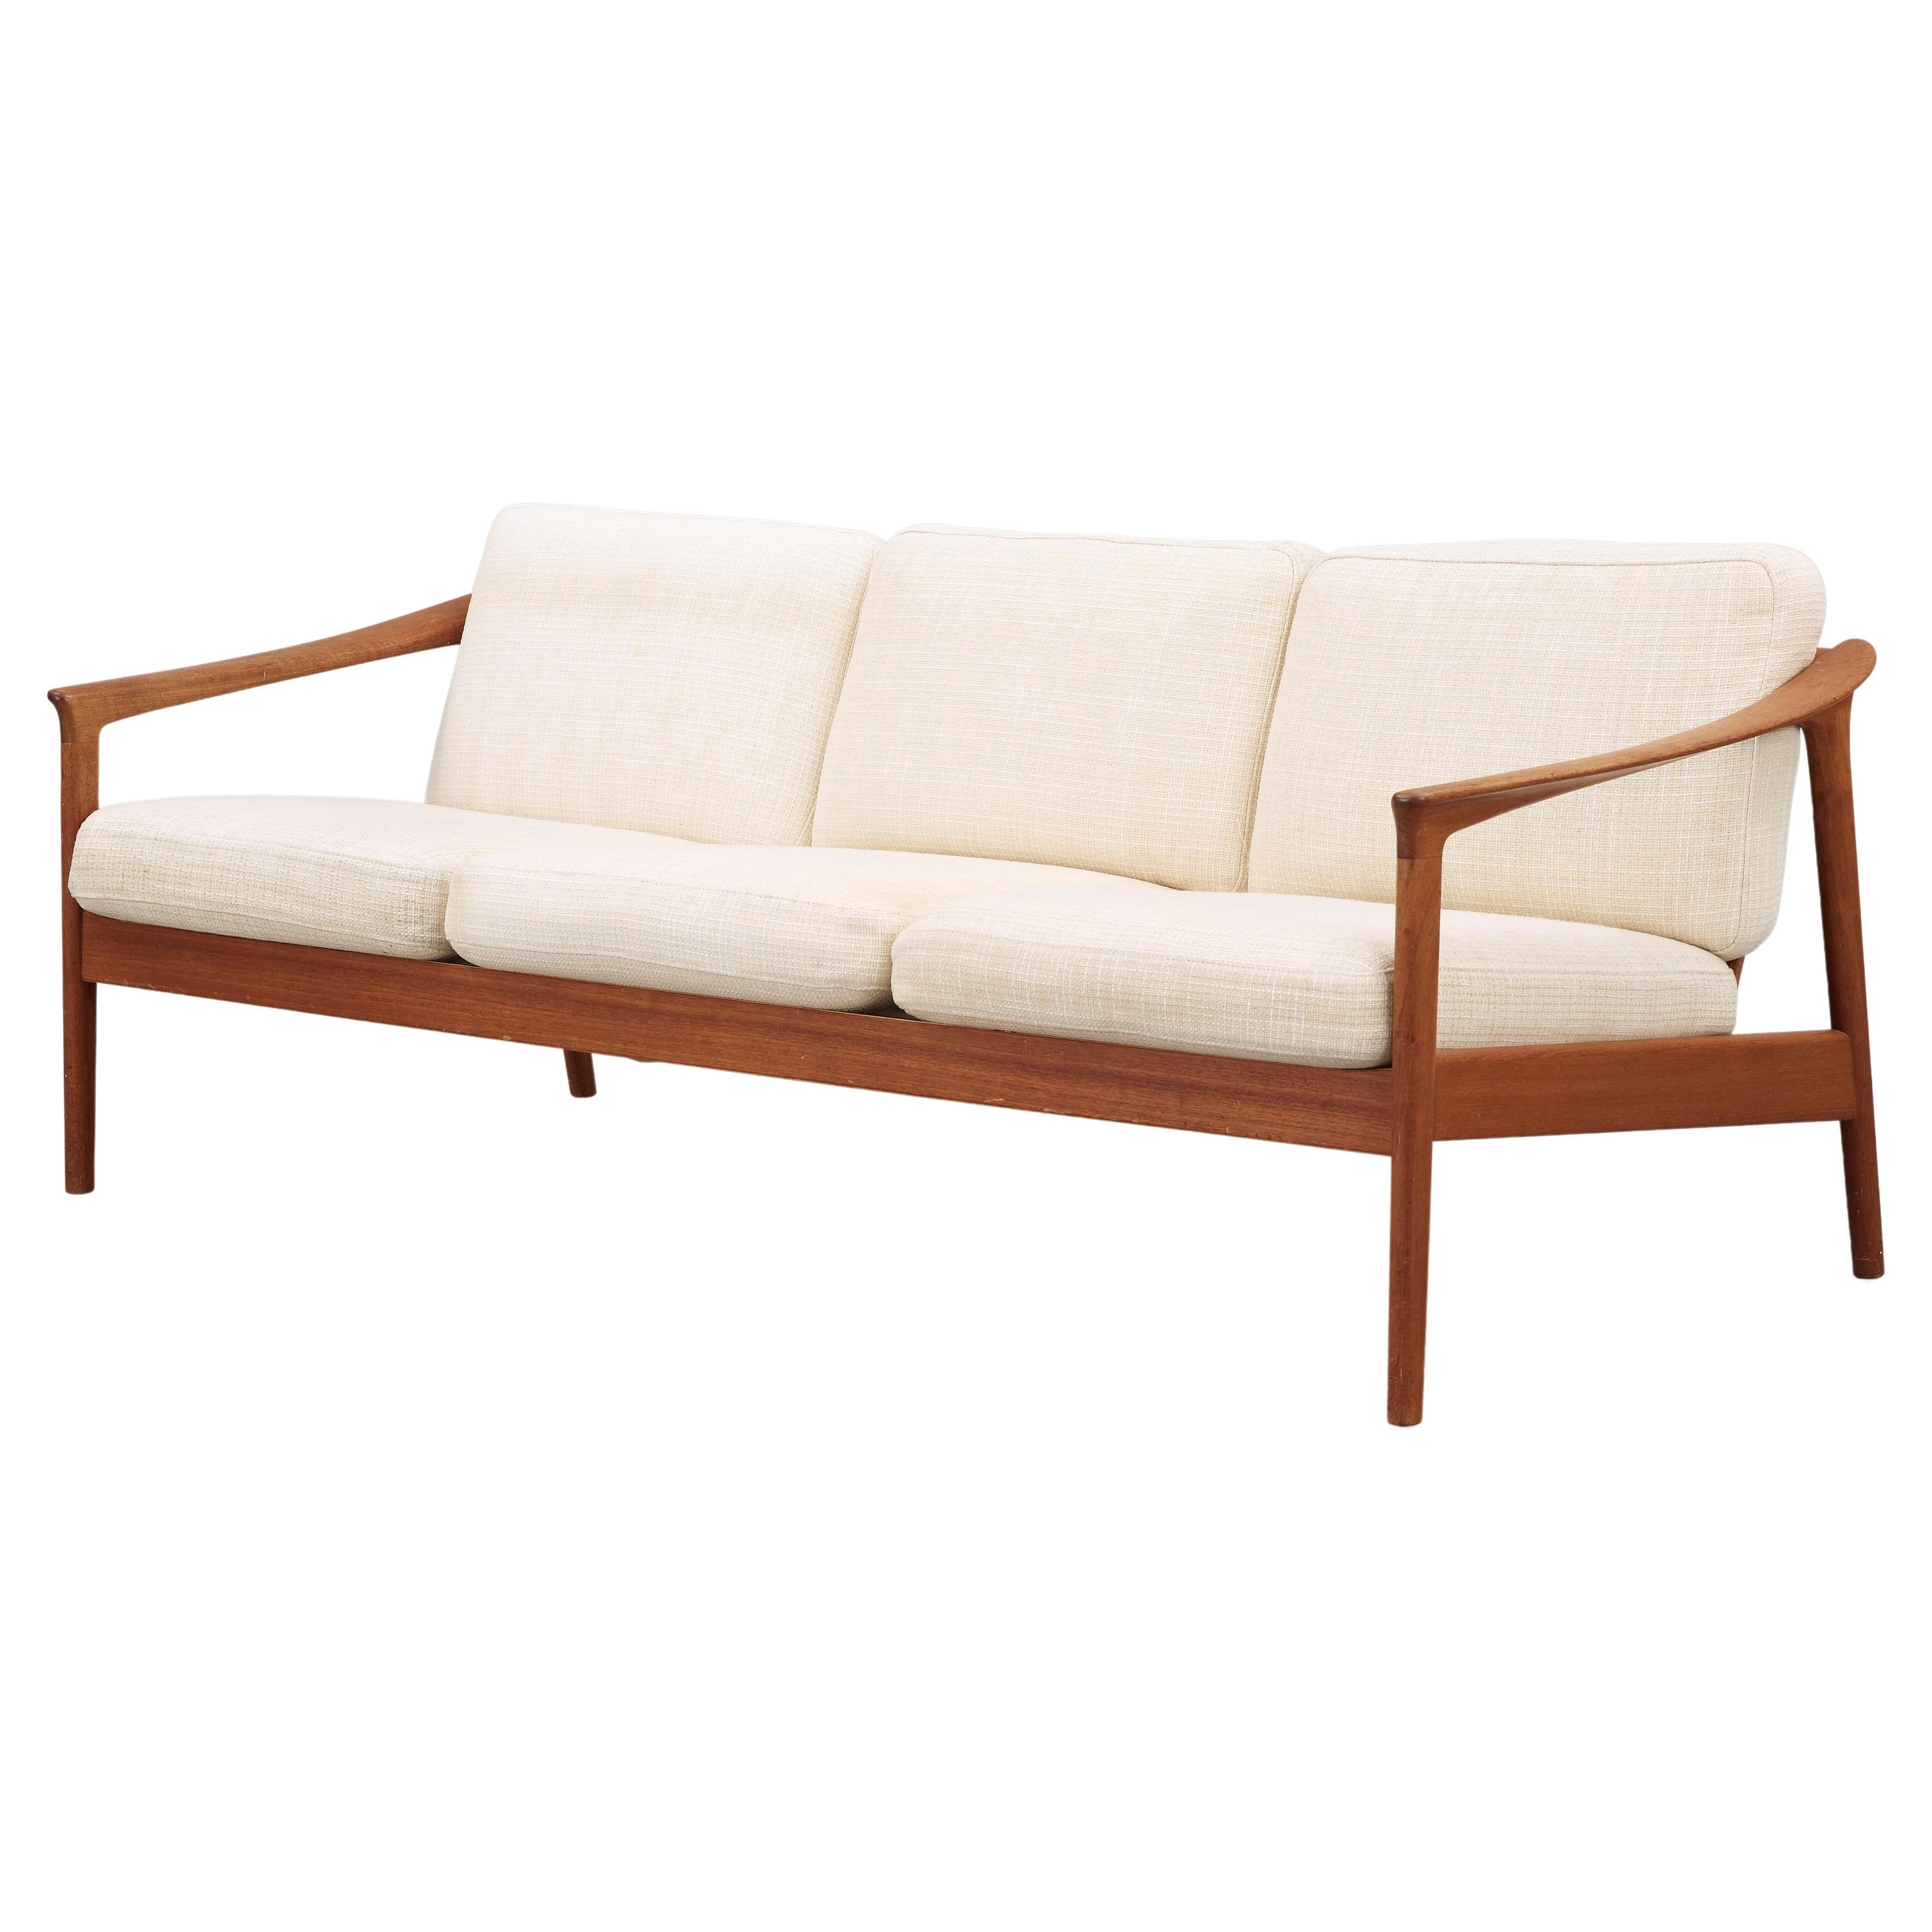 Sofa by Folke Ohlsson " Colorado" Made by Bodafors Teak Wood Sweden 1960 Signed For Sale